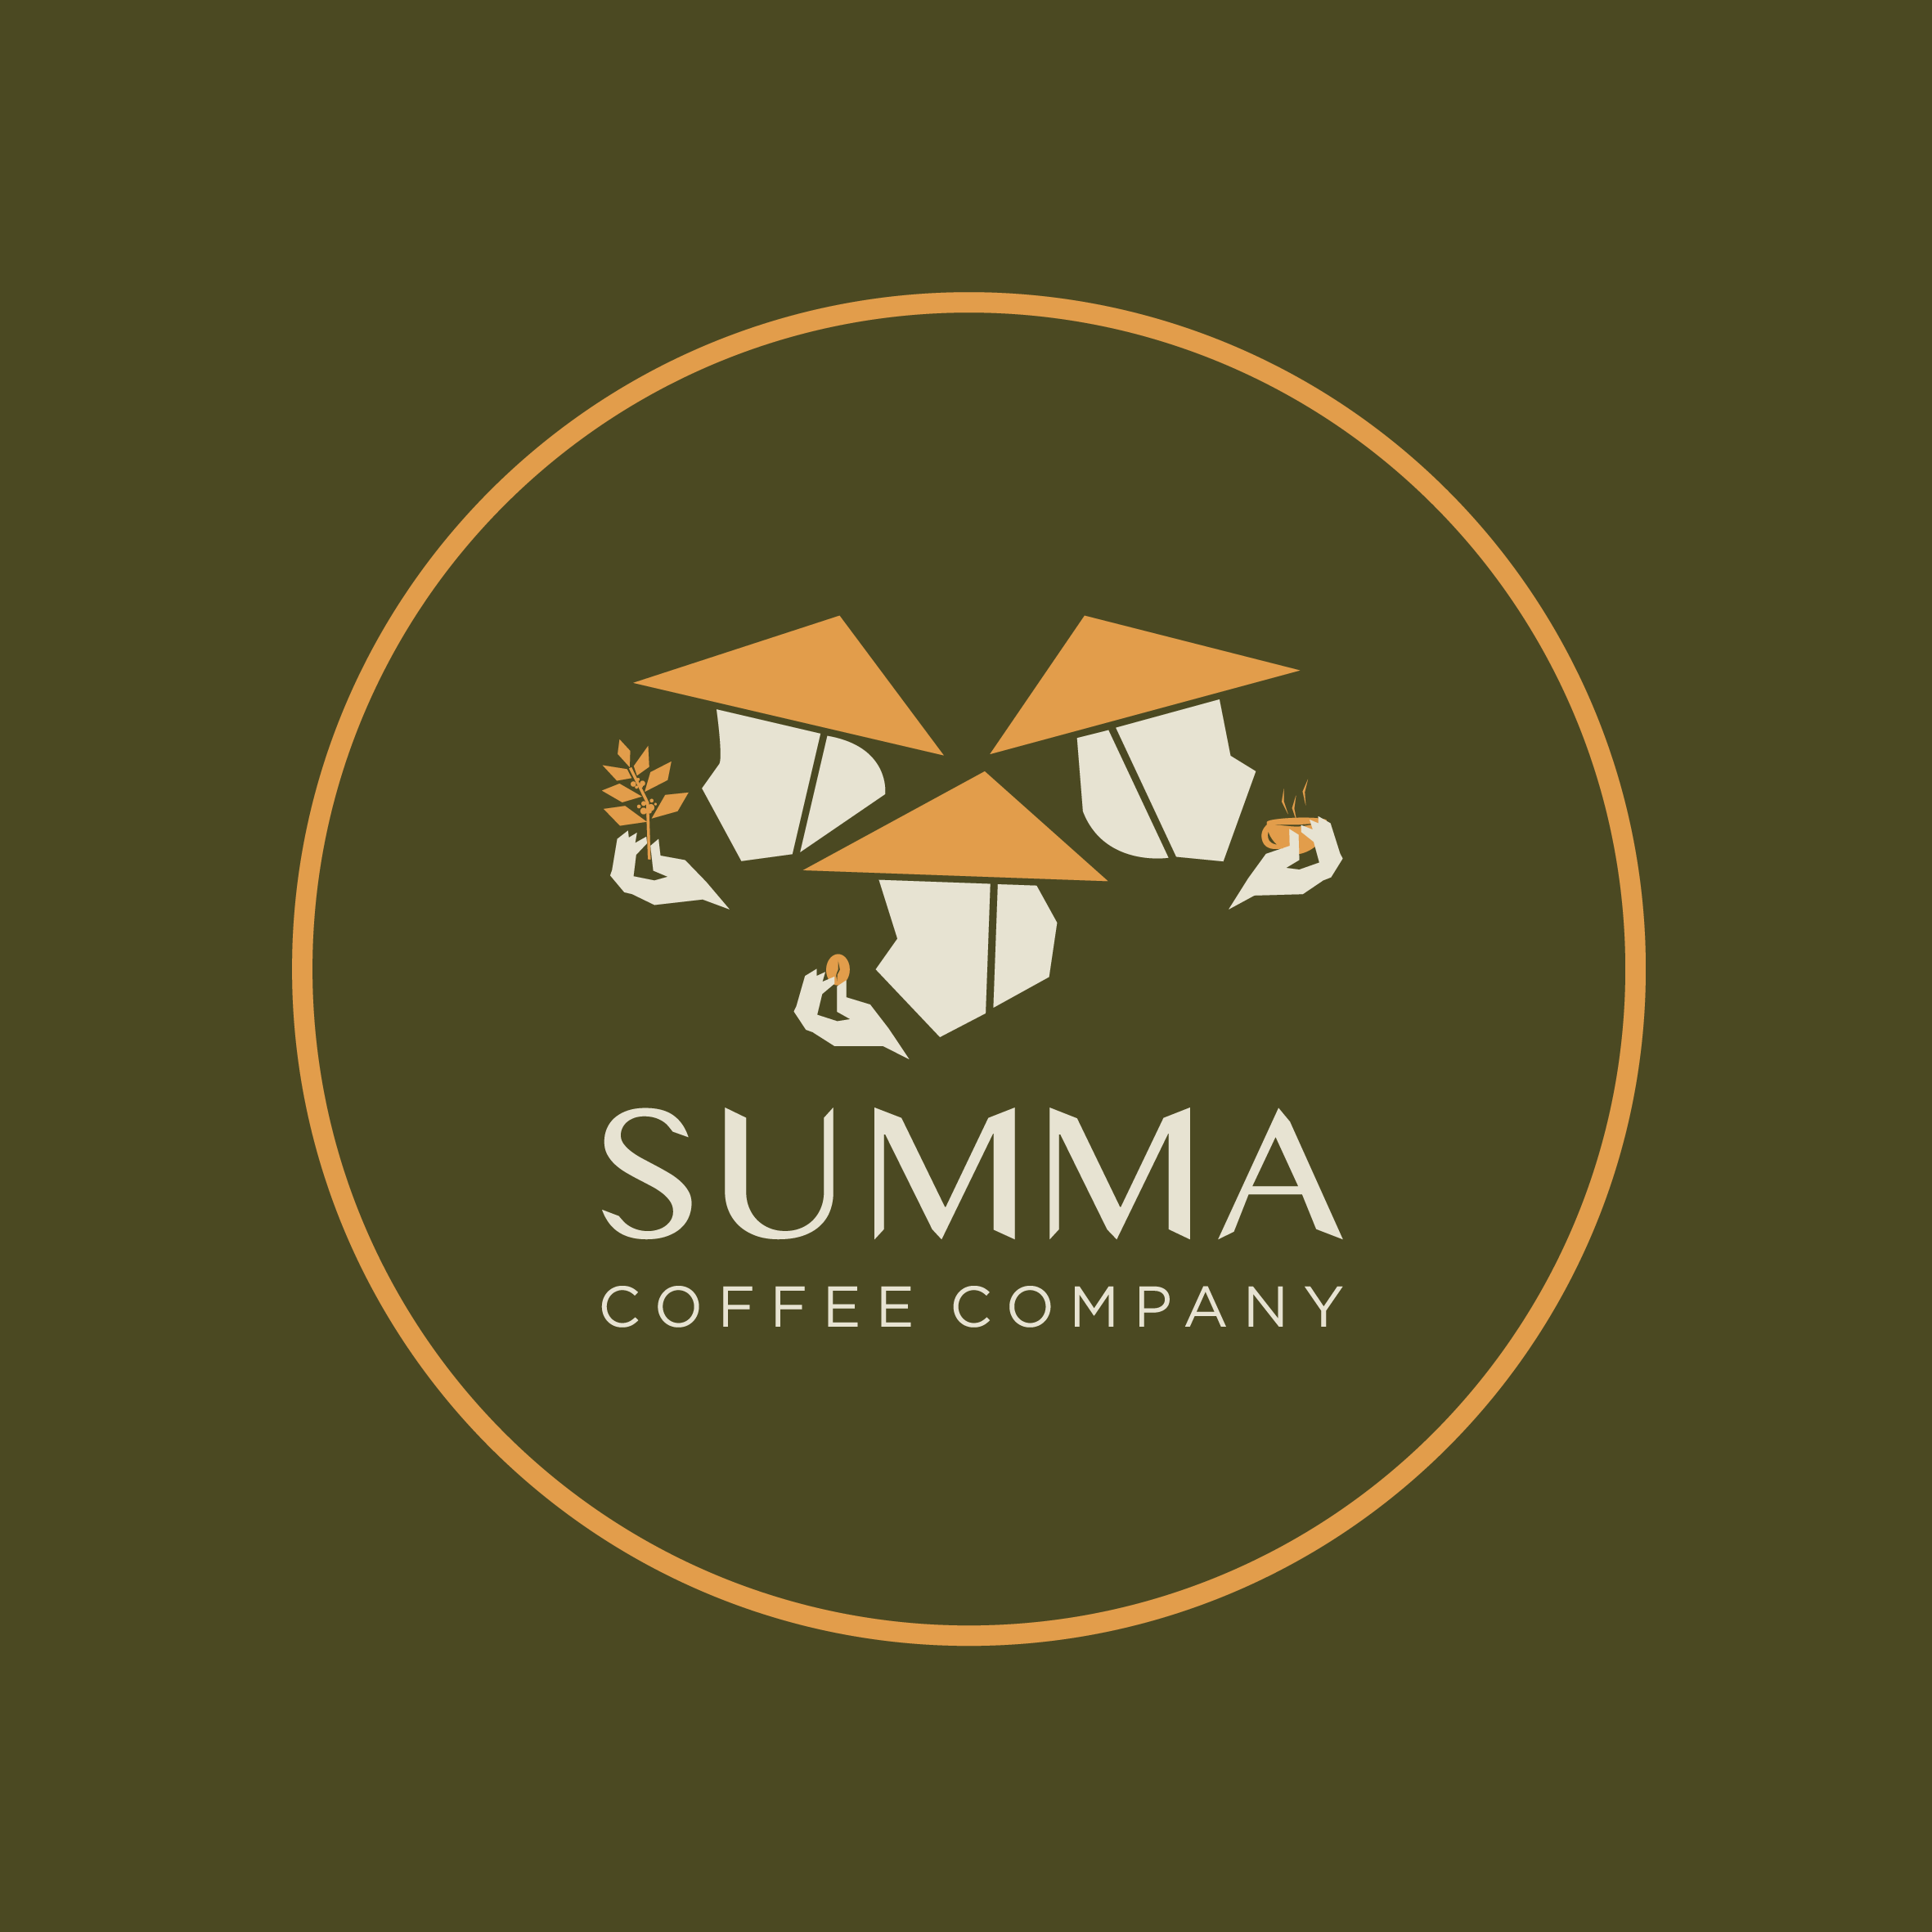 Summa Coffee Company